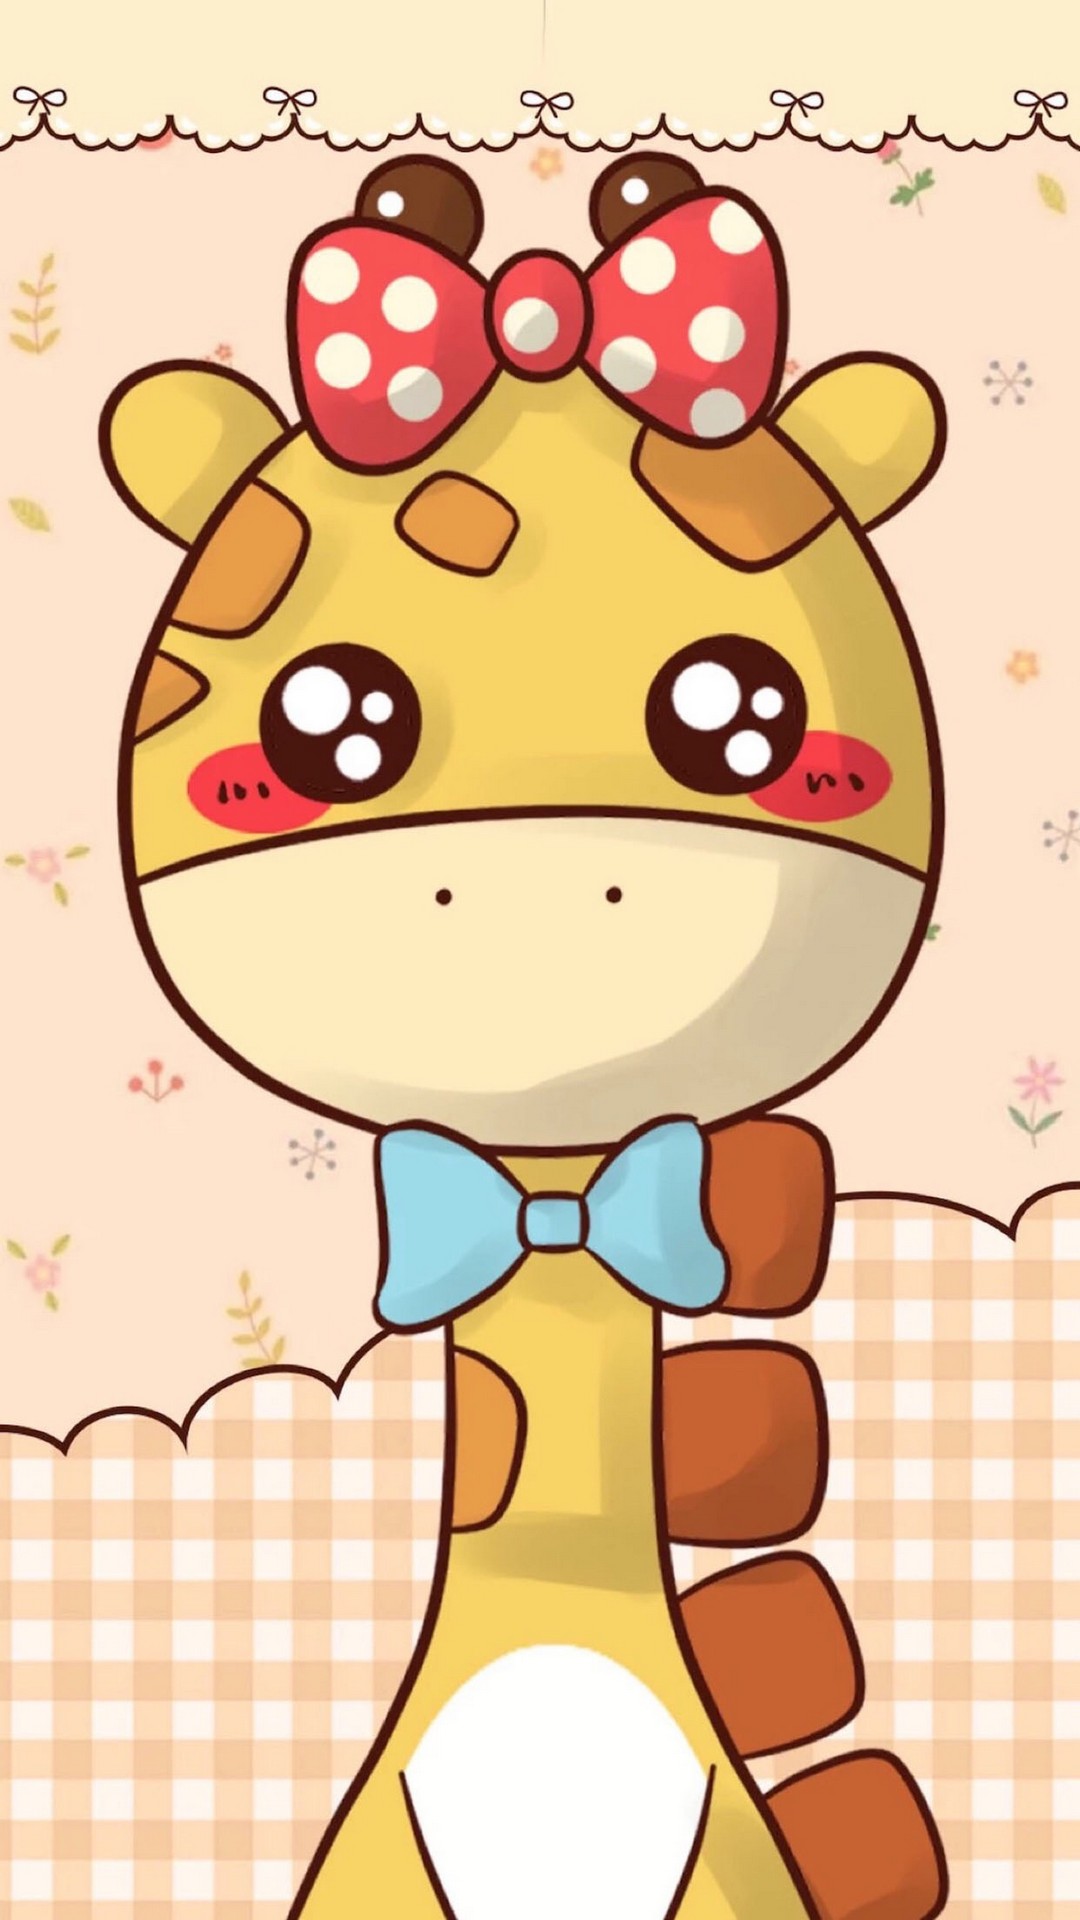 Cute Giraffe Wallpaper Android